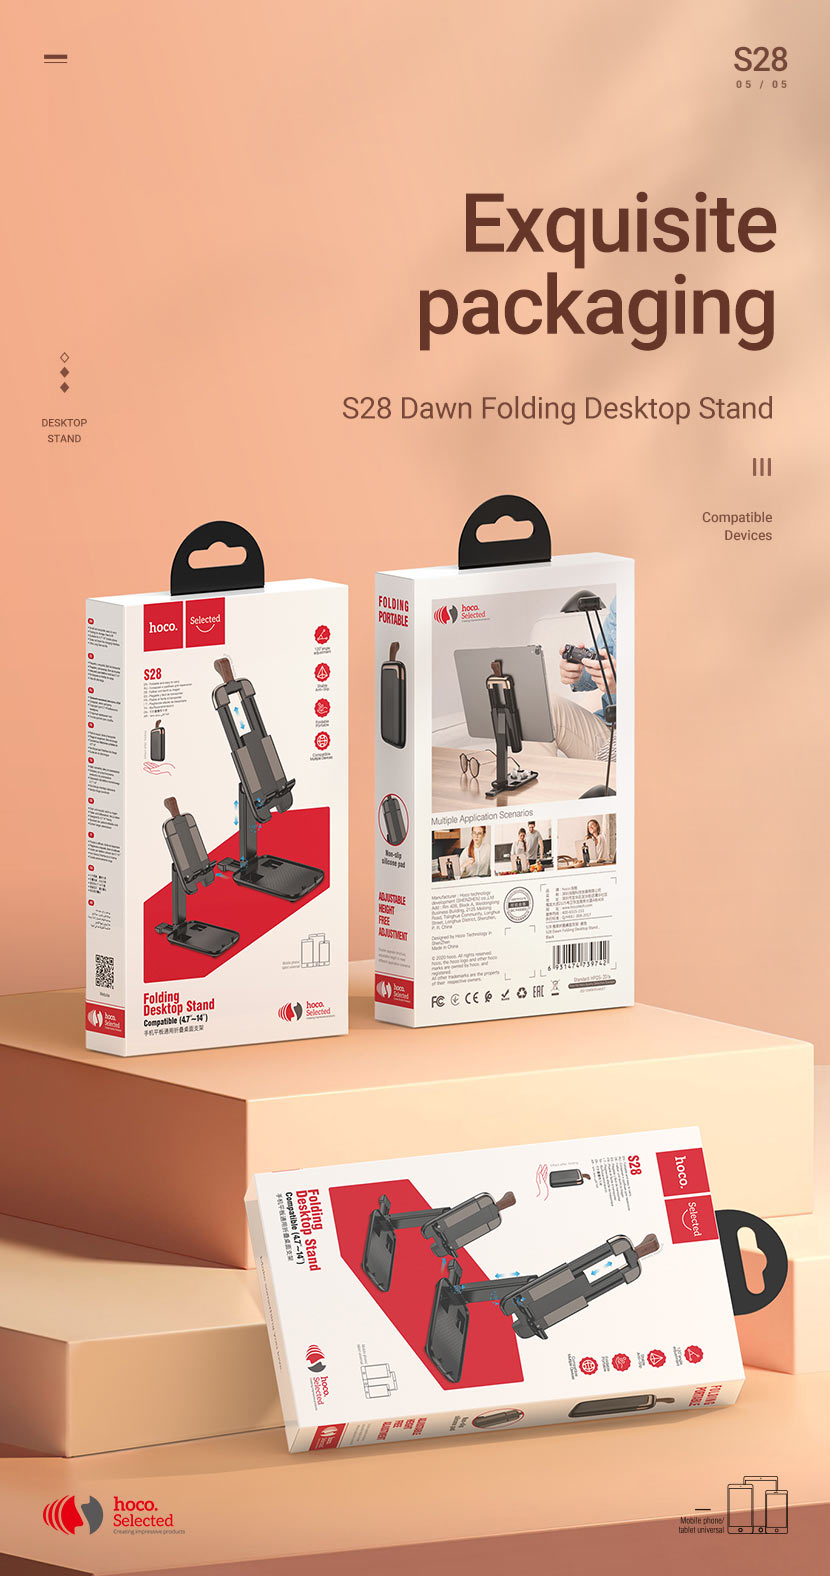 hoco selected news s28 dawn folding desktop stand package en